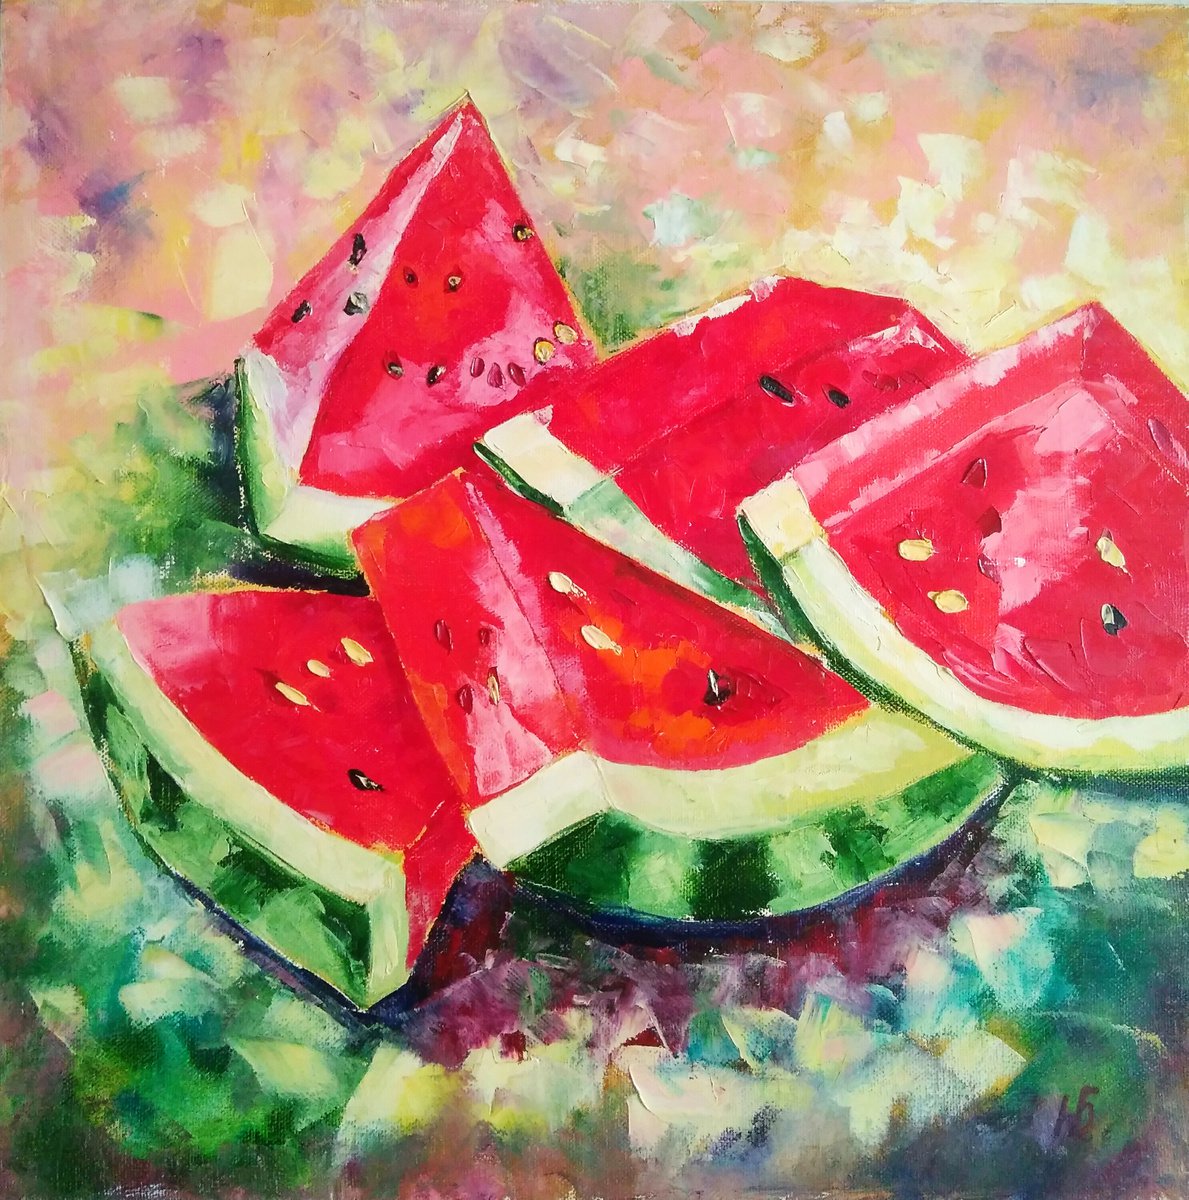 Sugar watermelon, Watermelon Painting Still Life Original Art on Canvas Tropical Fruit Art... by Yulia Berseneva